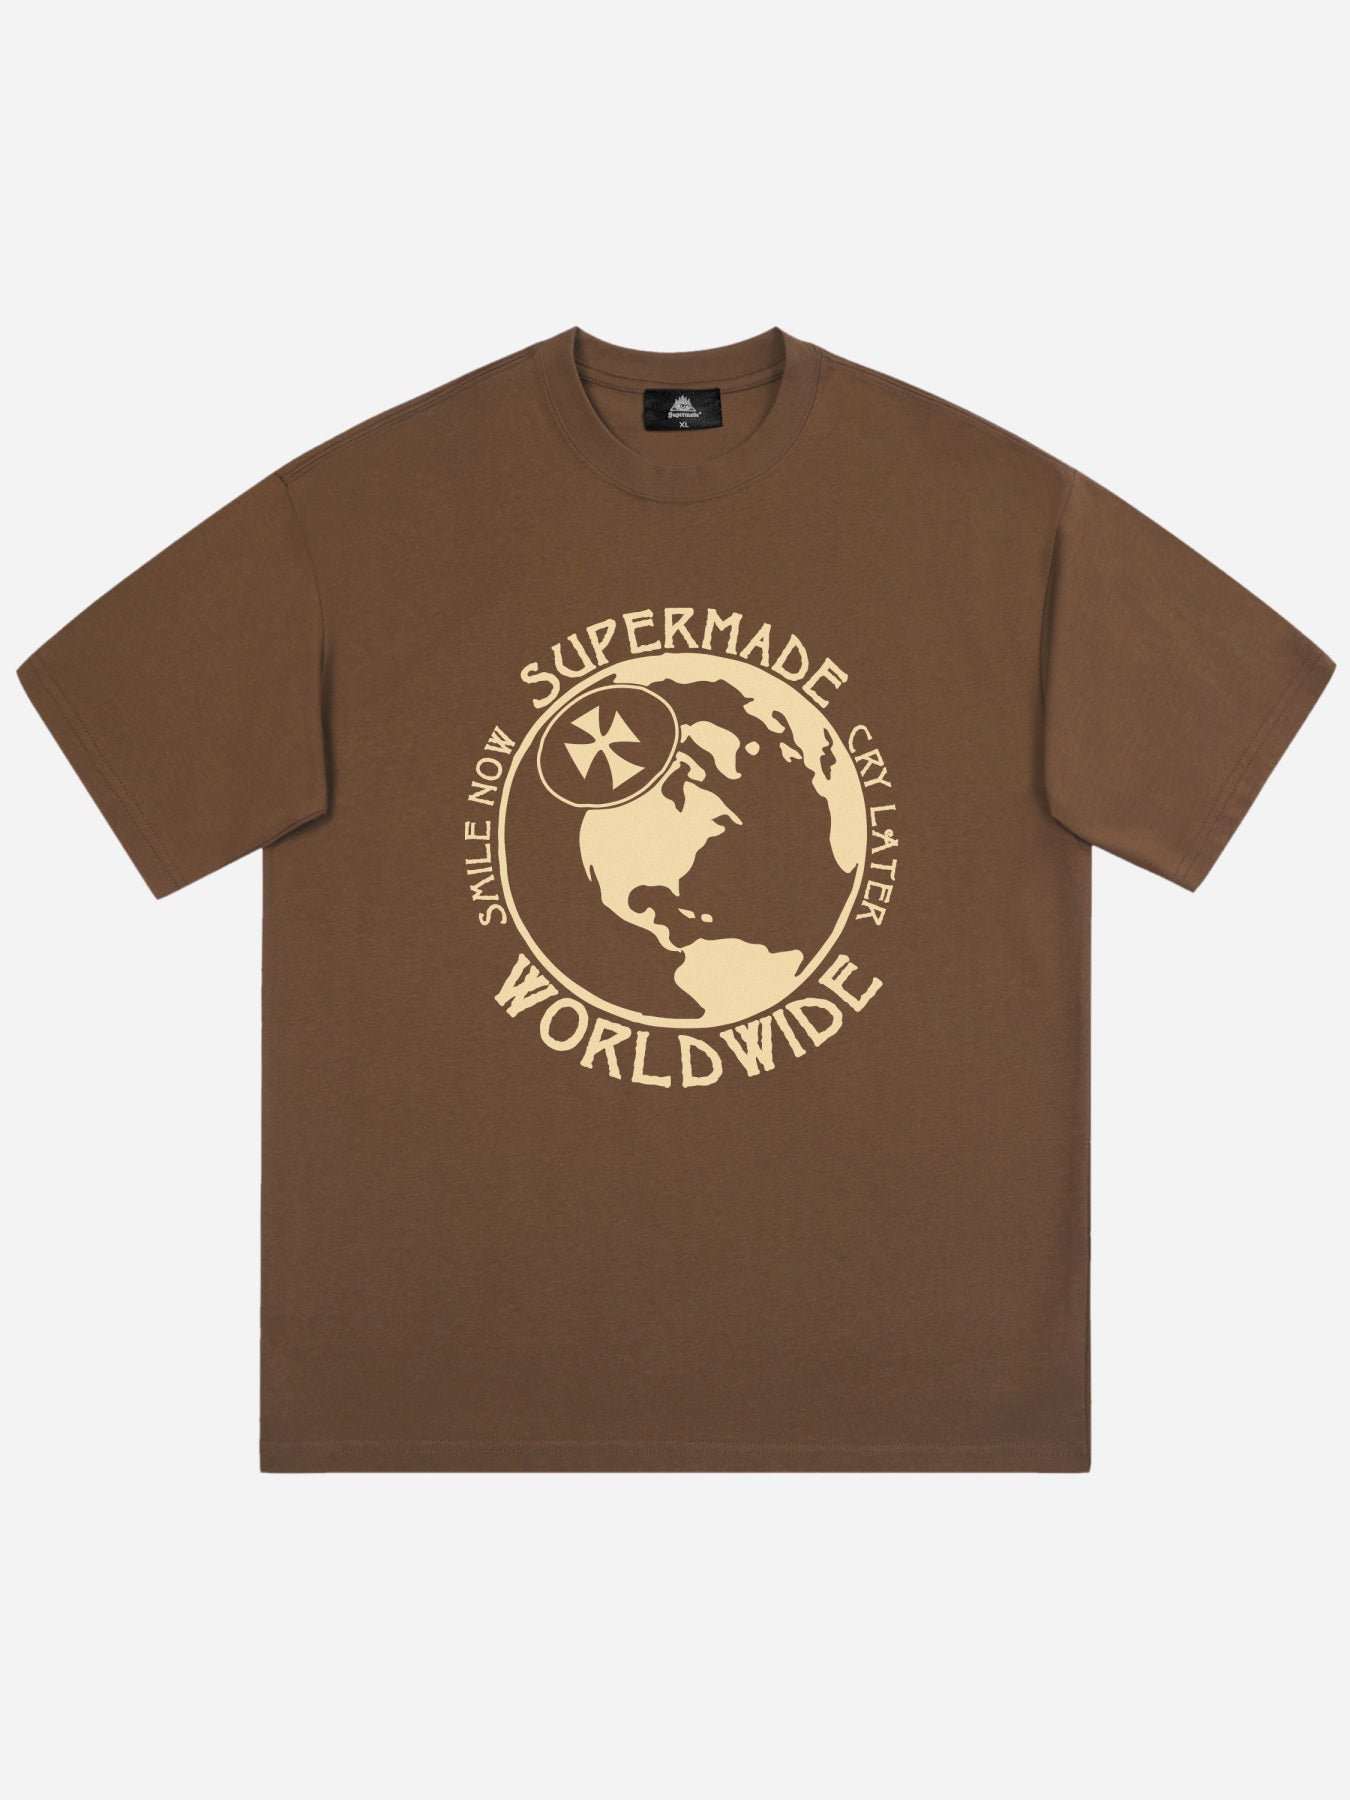 Thesupermade Globe Print T-shirt